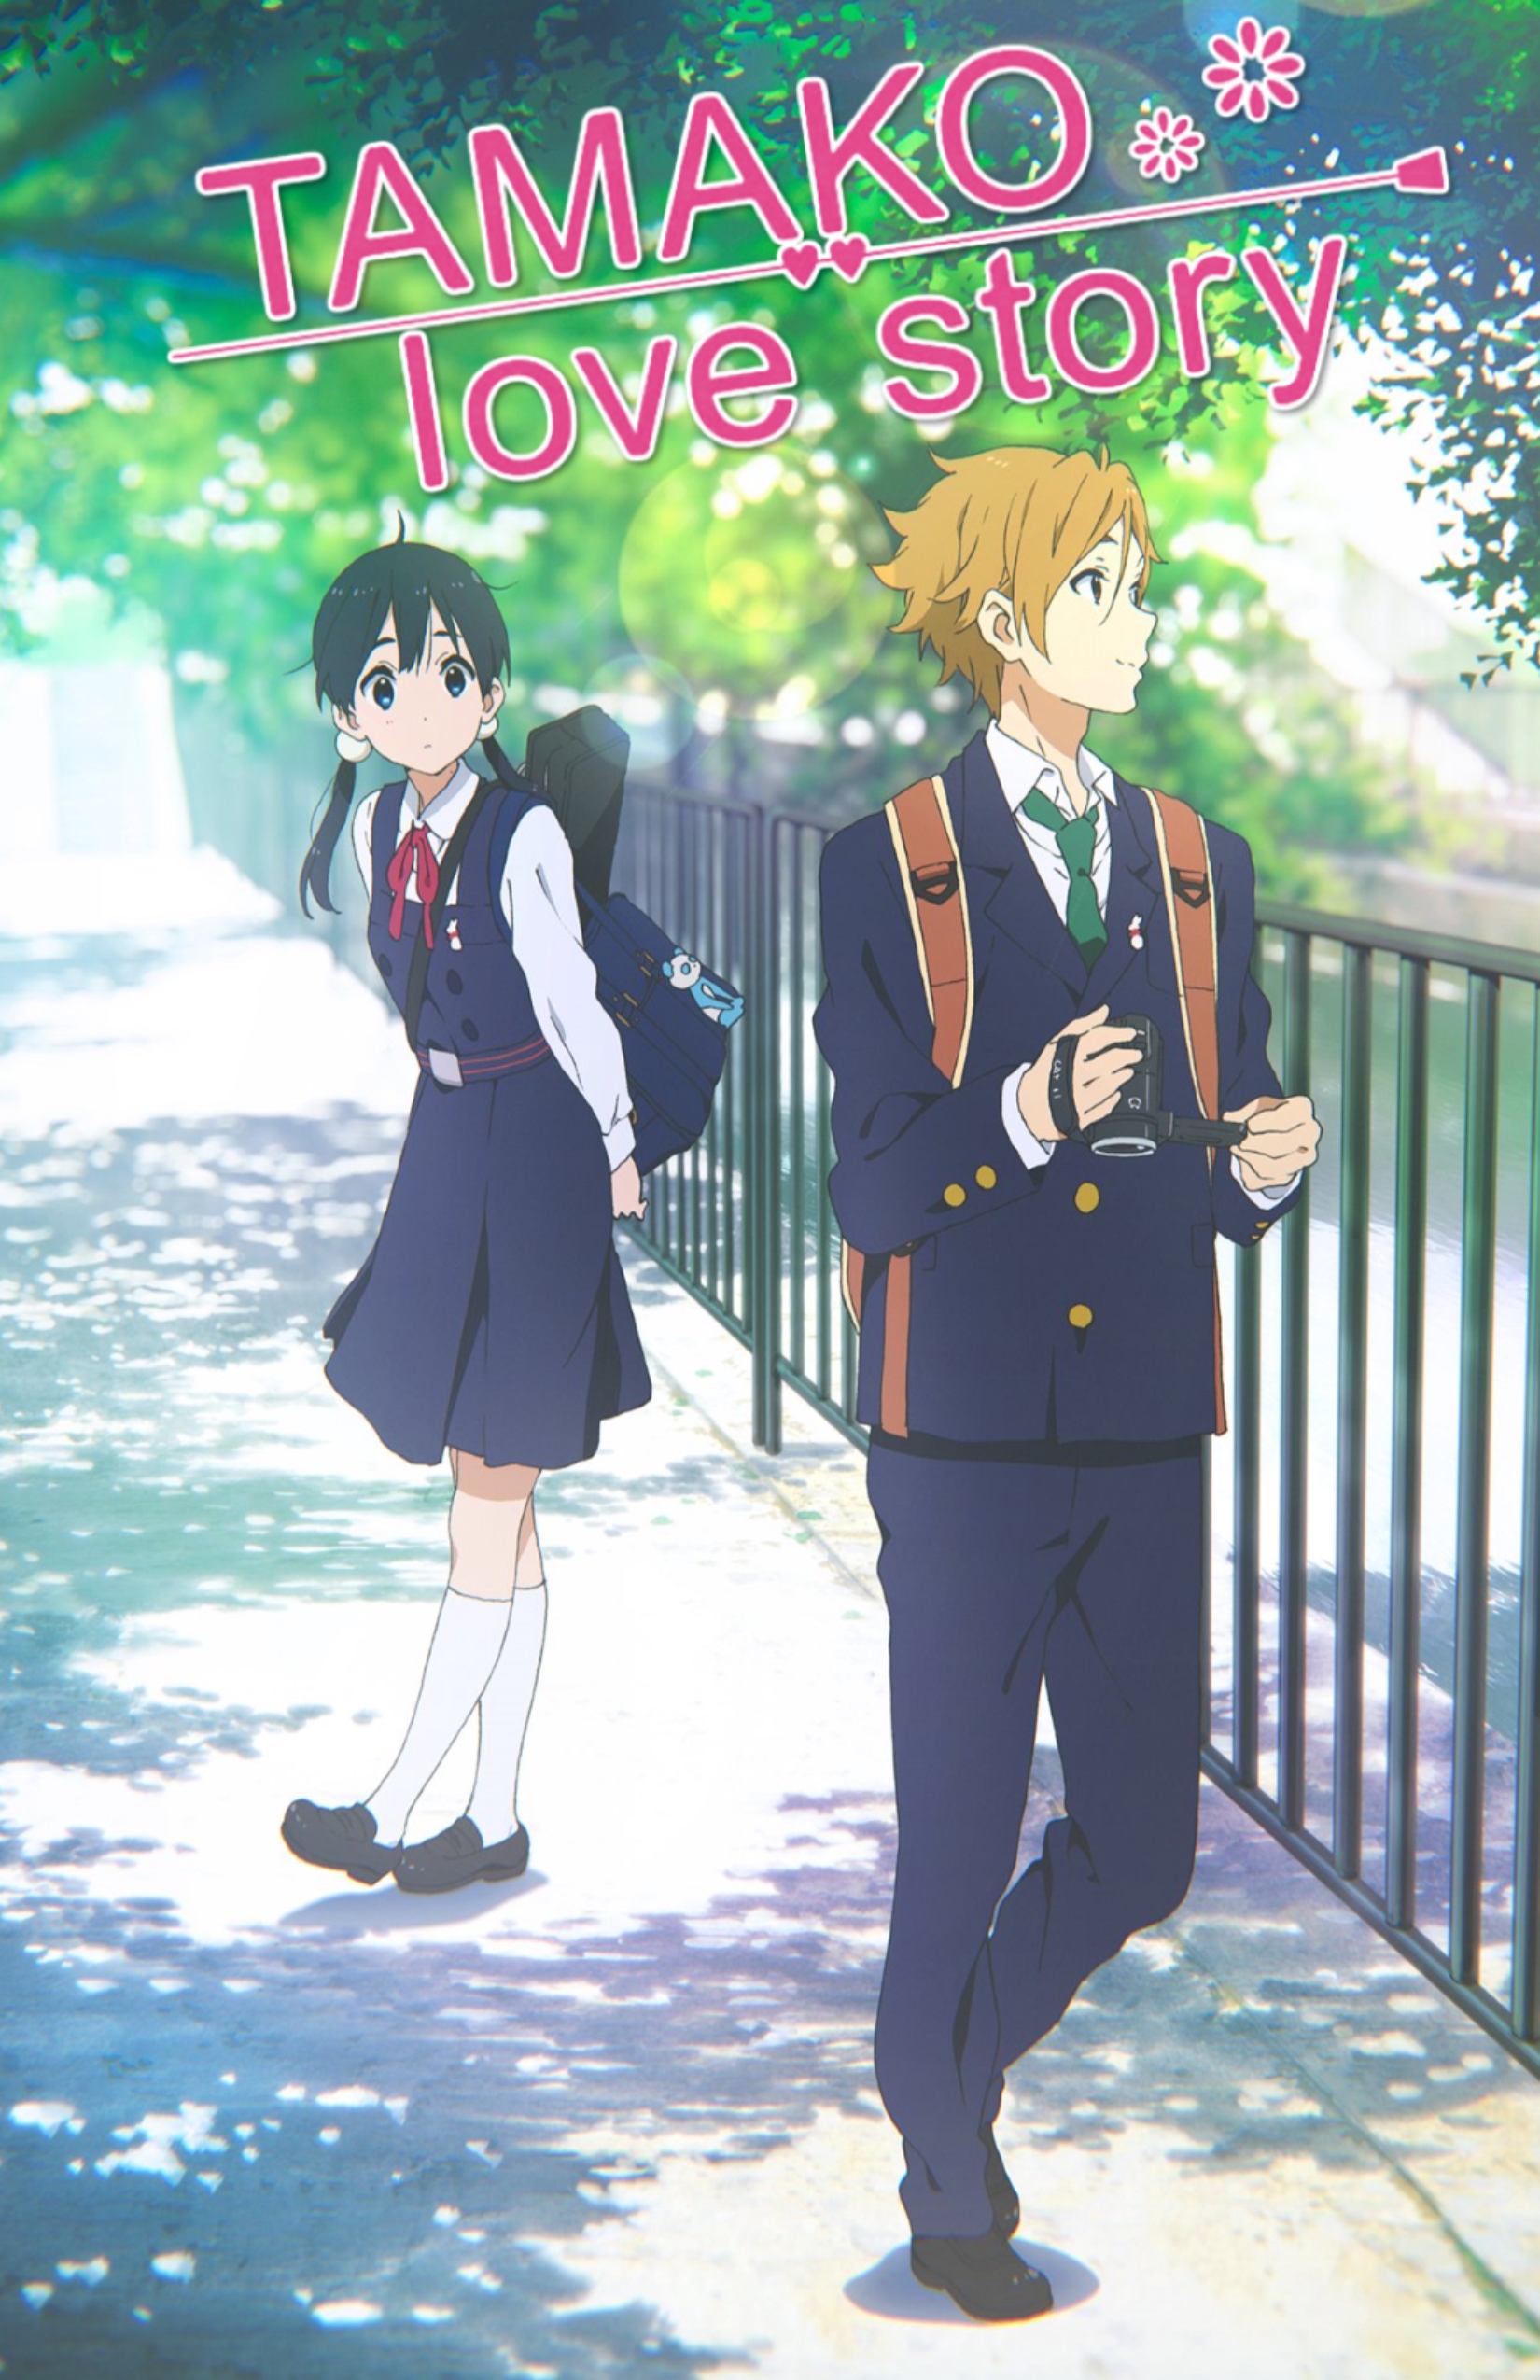 Tamako Love Story (2014) is the best anime romantic